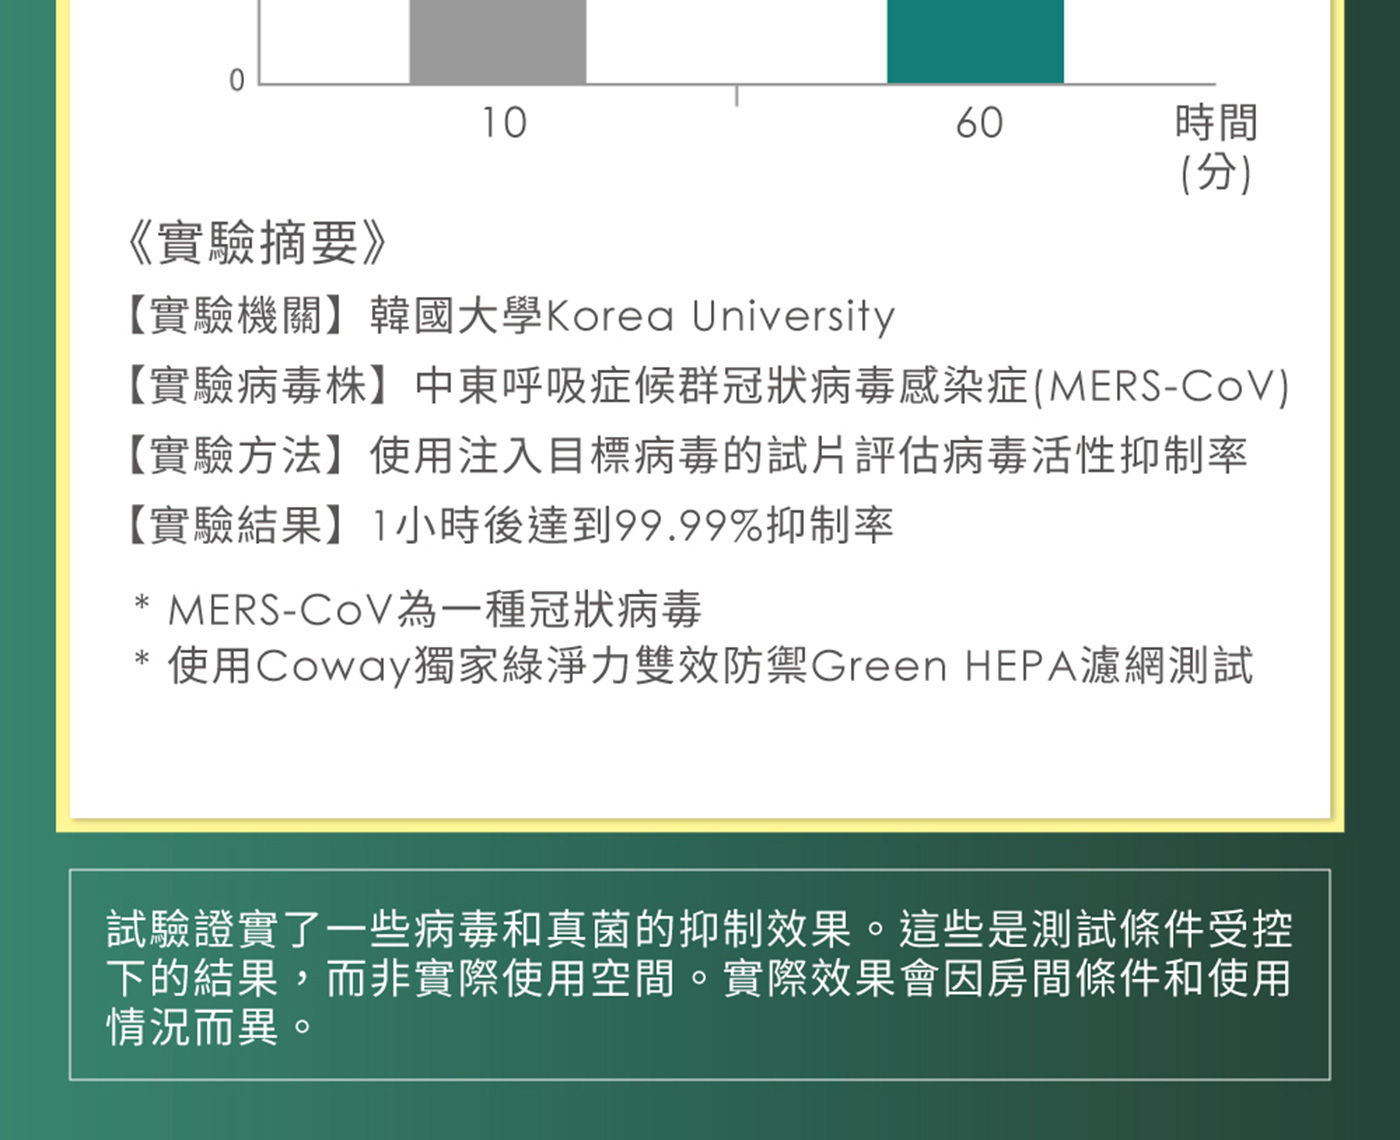 Coway 空氣清淨機 Green HEPA雙效防禦濾網